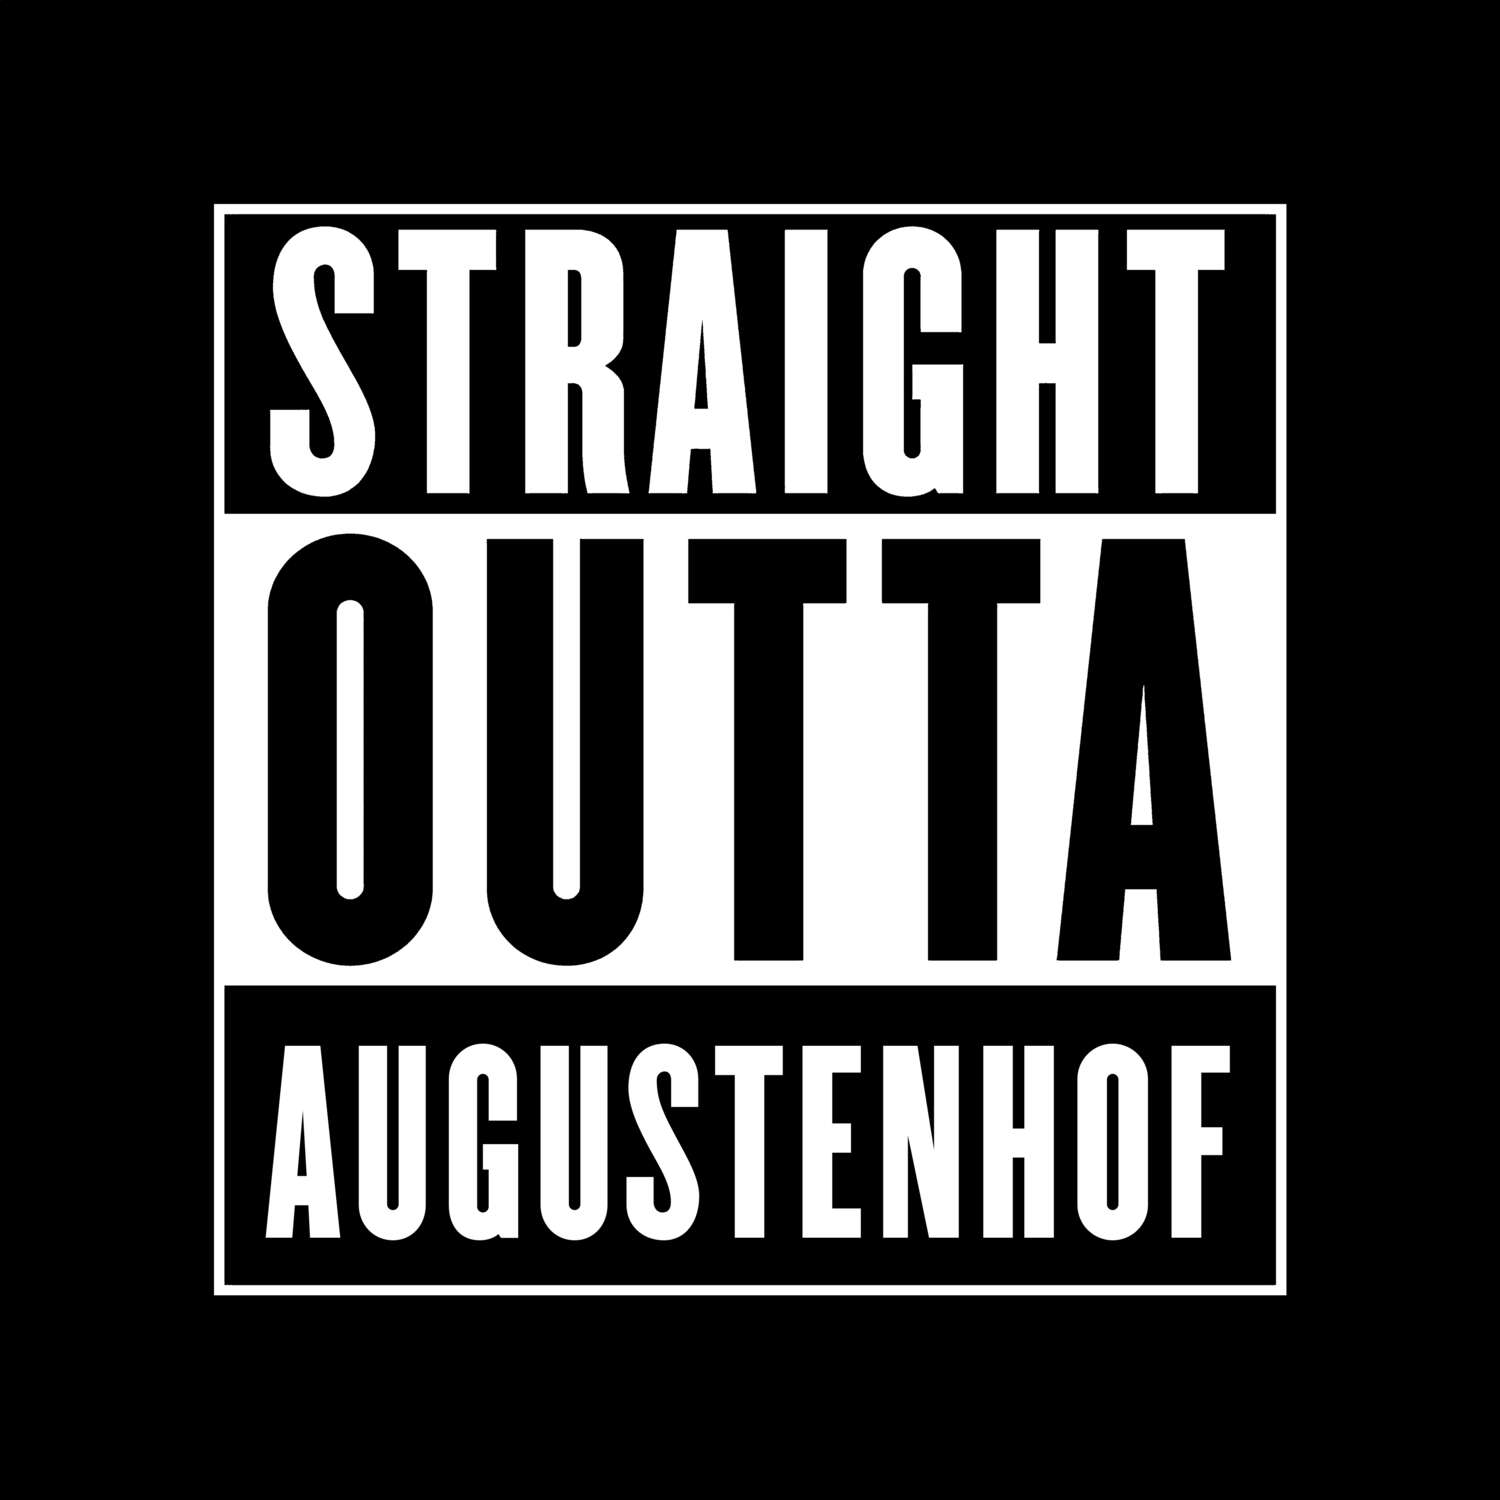 Augustenhof T-Shirt »Straight Outta«